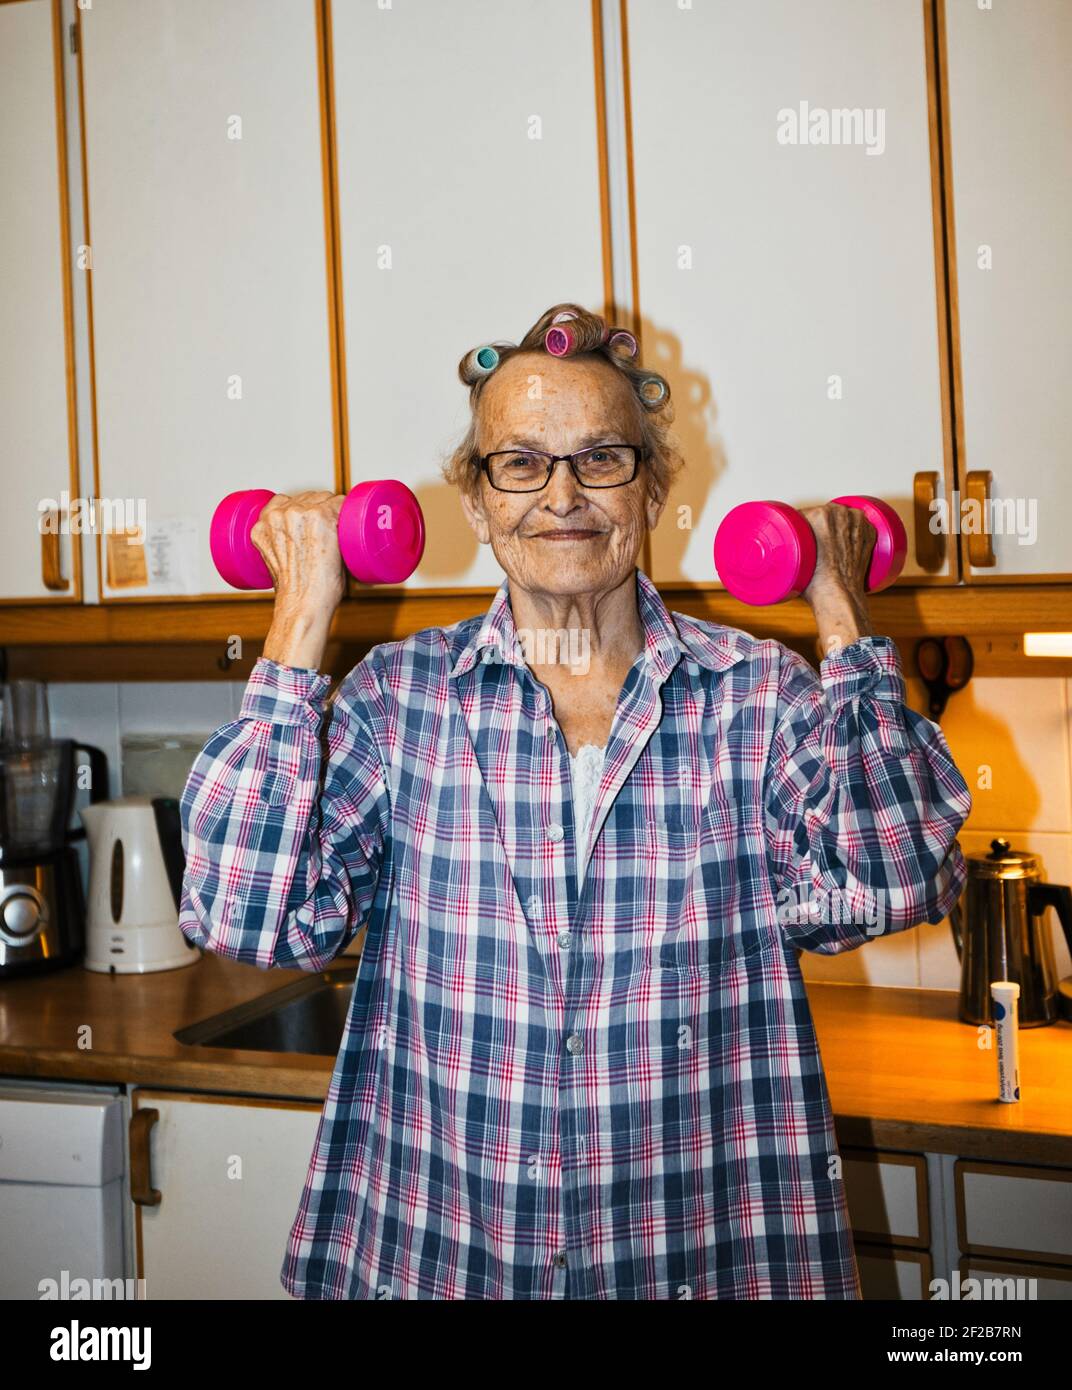 Cheerful senior elderly Swedish woman lifting pink dumbbells in kitchen. Concept of lifestyle, seniors exercising, active lifestyle Stock Photo